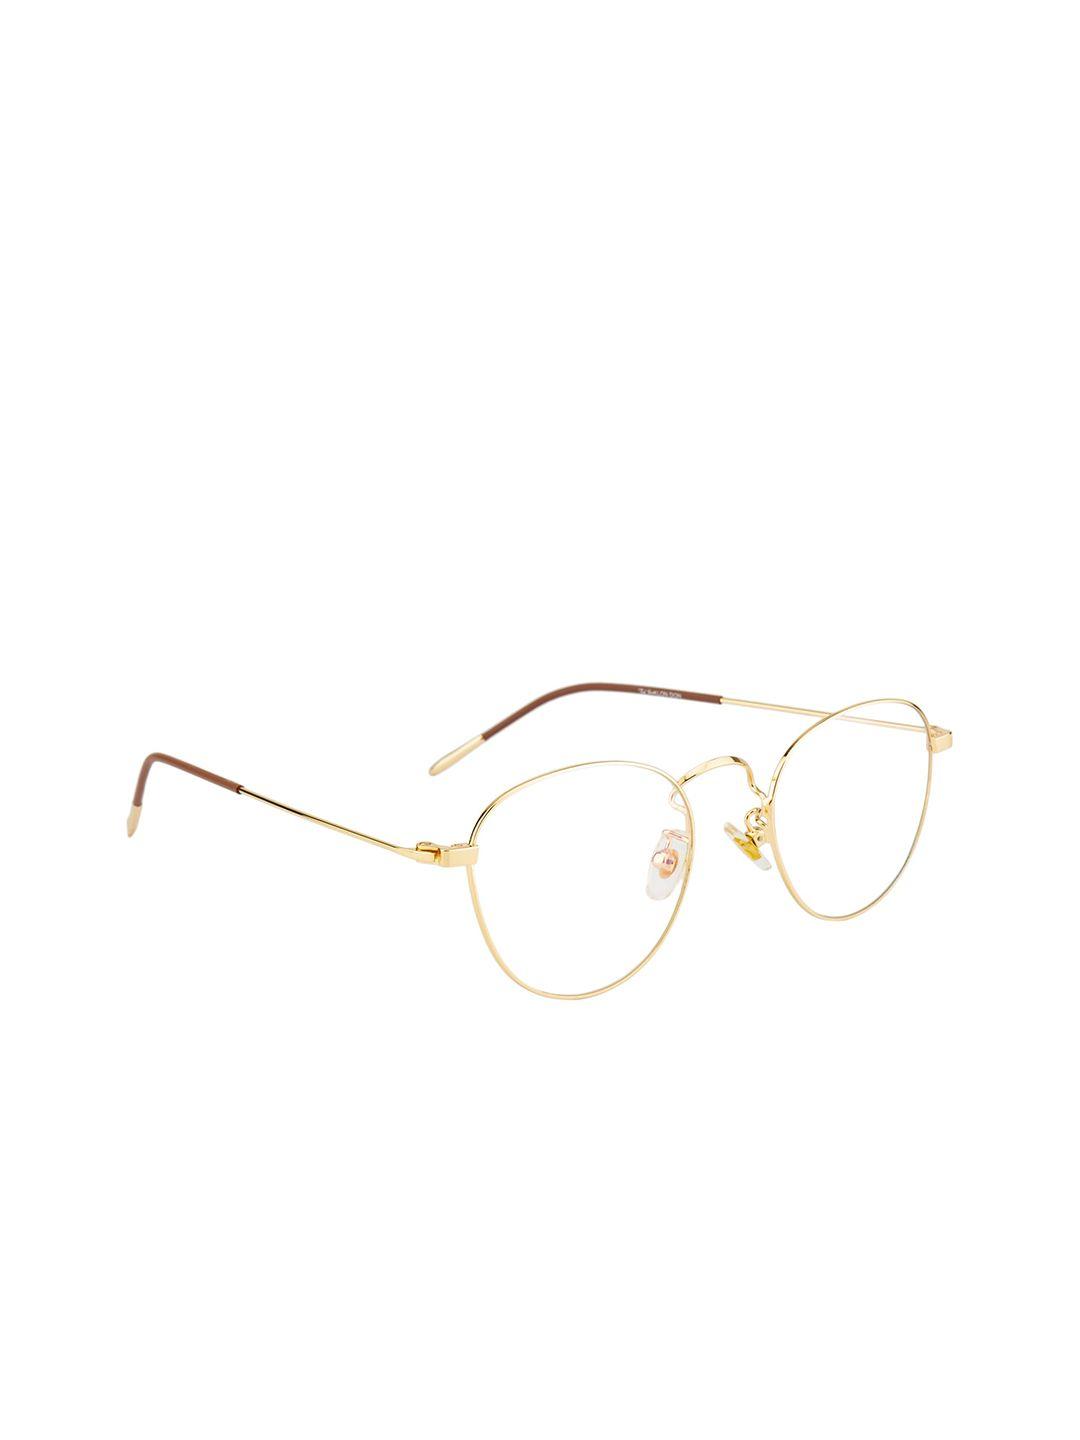 ted smith unisex gold-toned full rim round frames eyeglasses